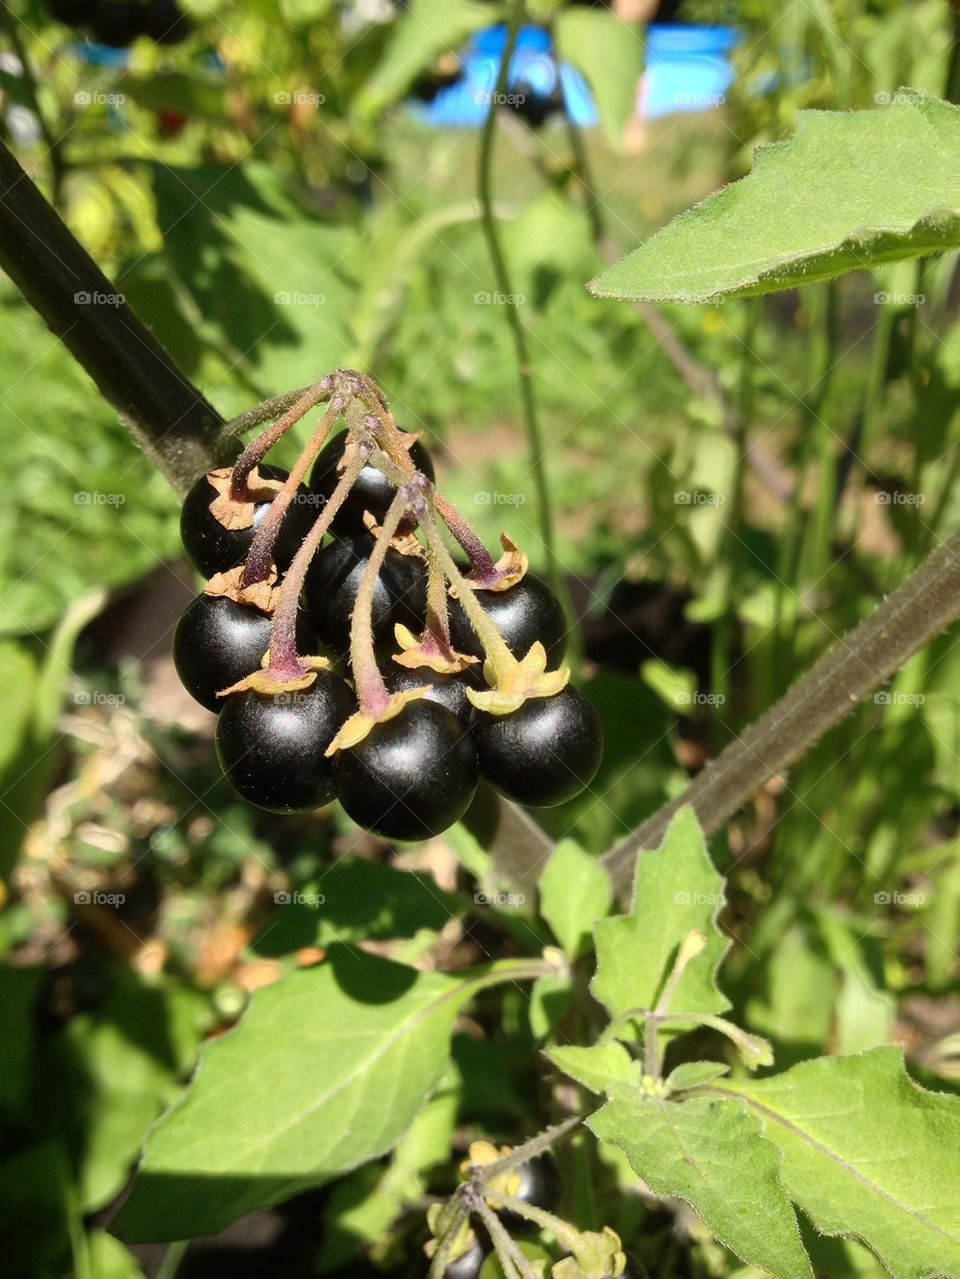 Very black berrys